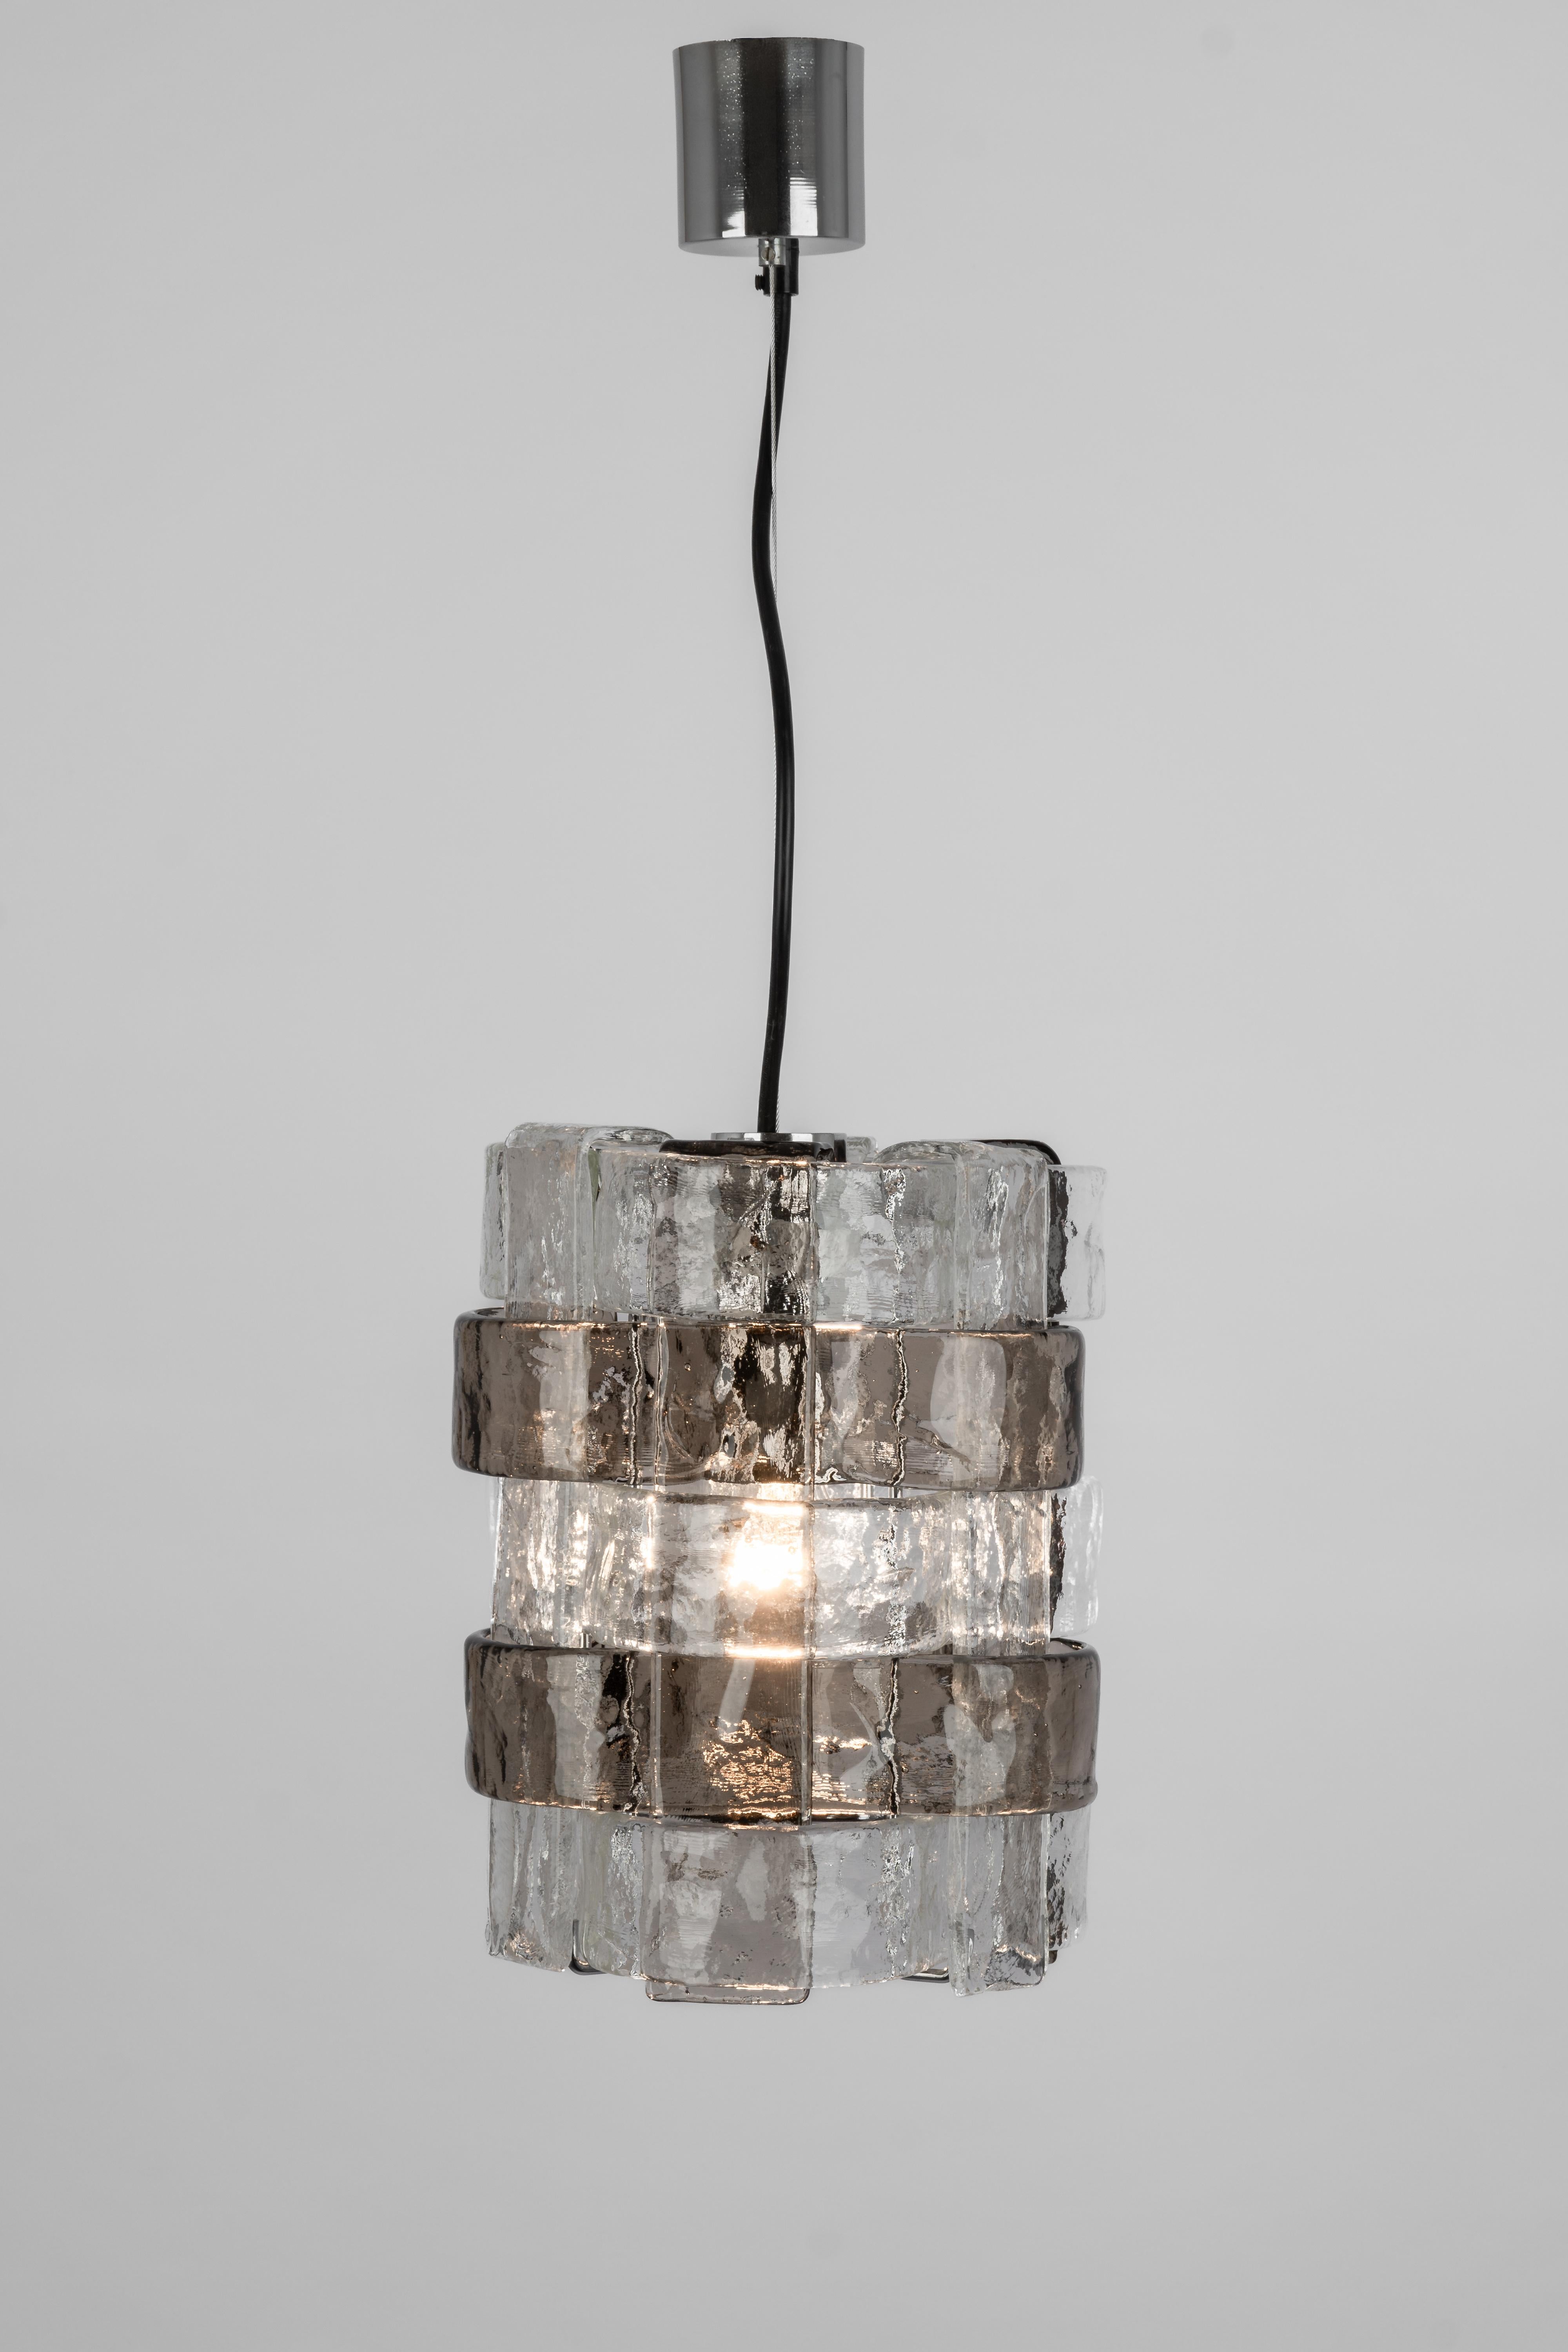 1 of 2 Murano Glass Pendant Lights Designed by Carlo Nason for Mazzega, 1970s For Sale 1